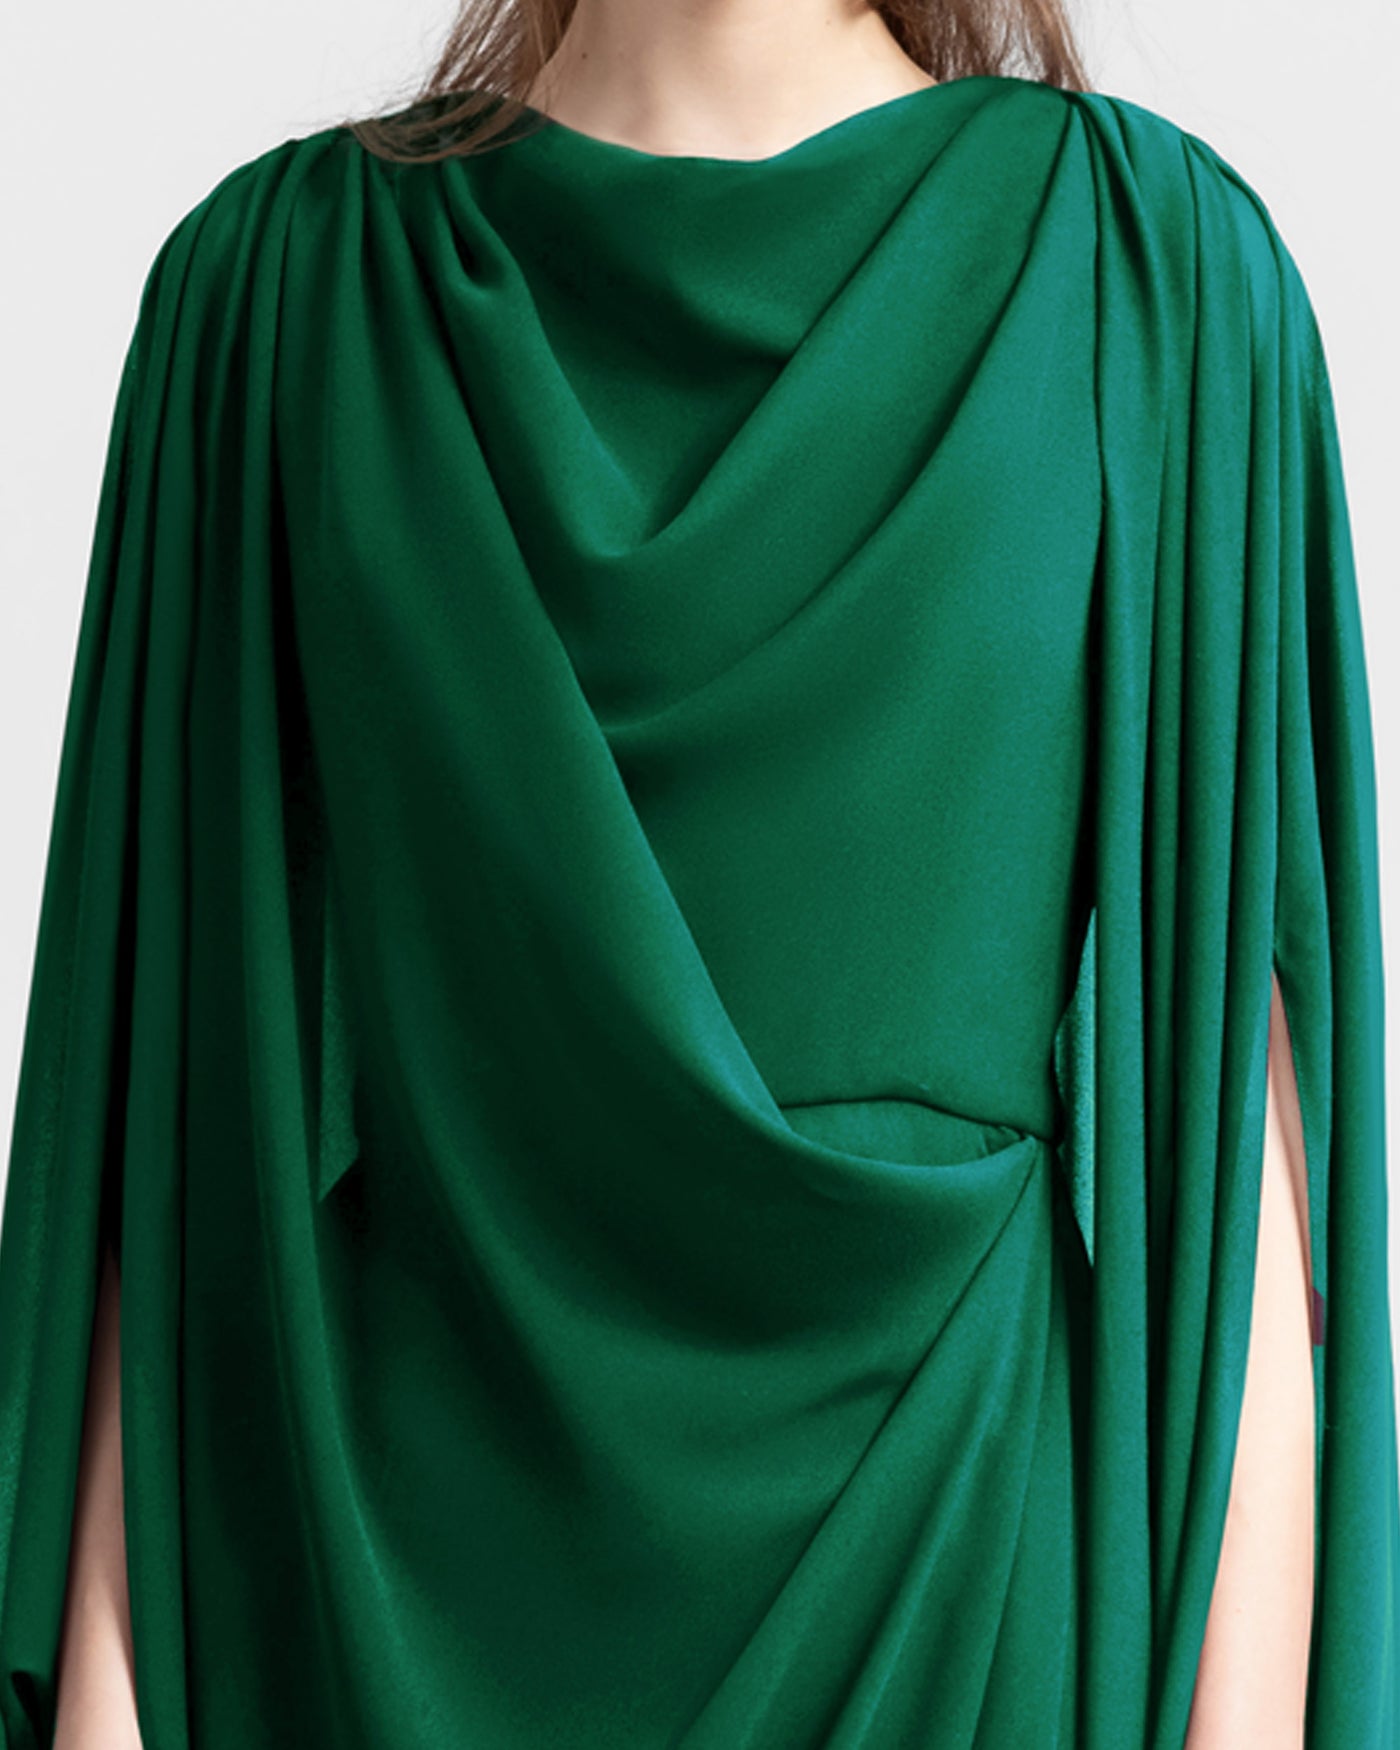 Green Draped Dress